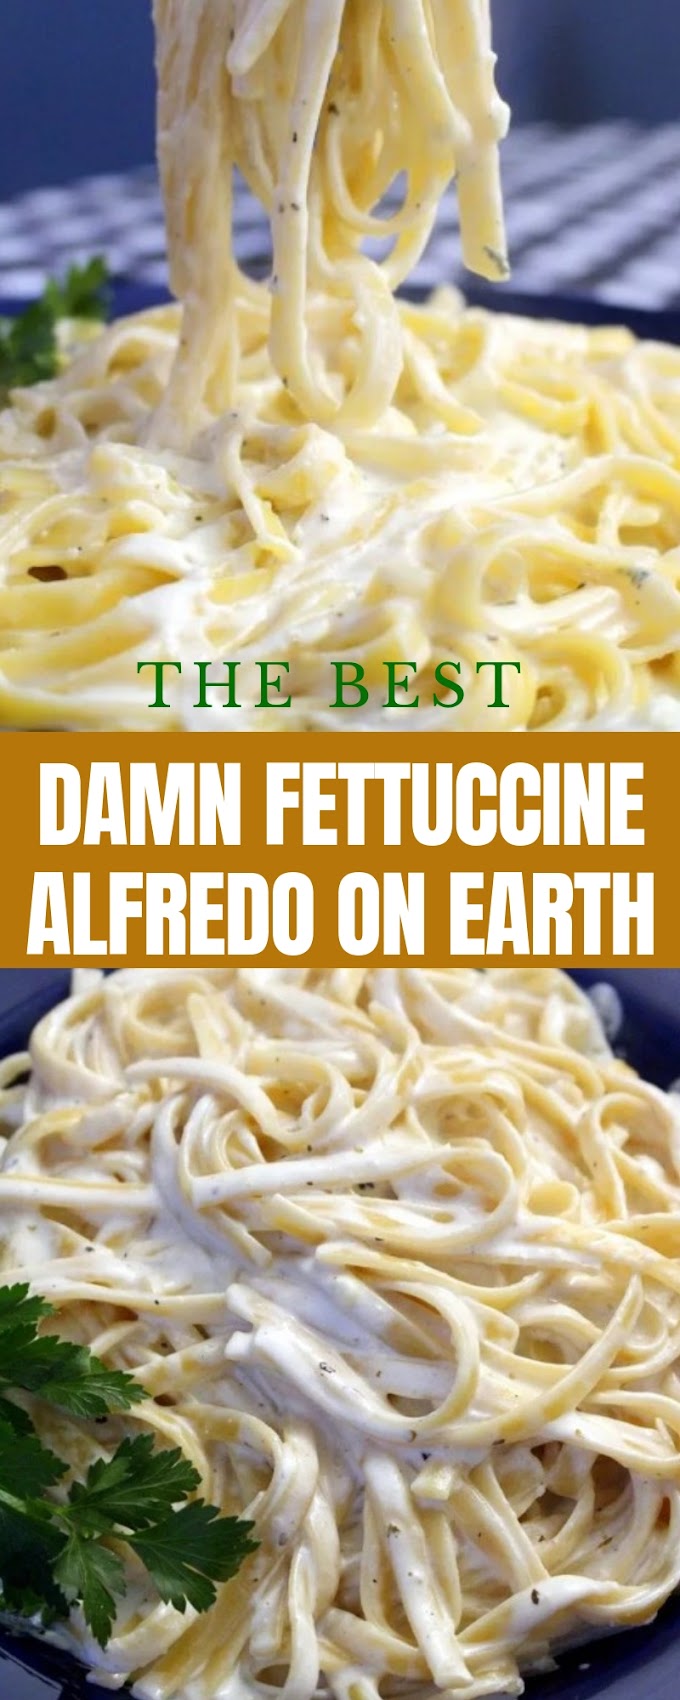 The Best Damn Fettuccine Alfredo on Earth